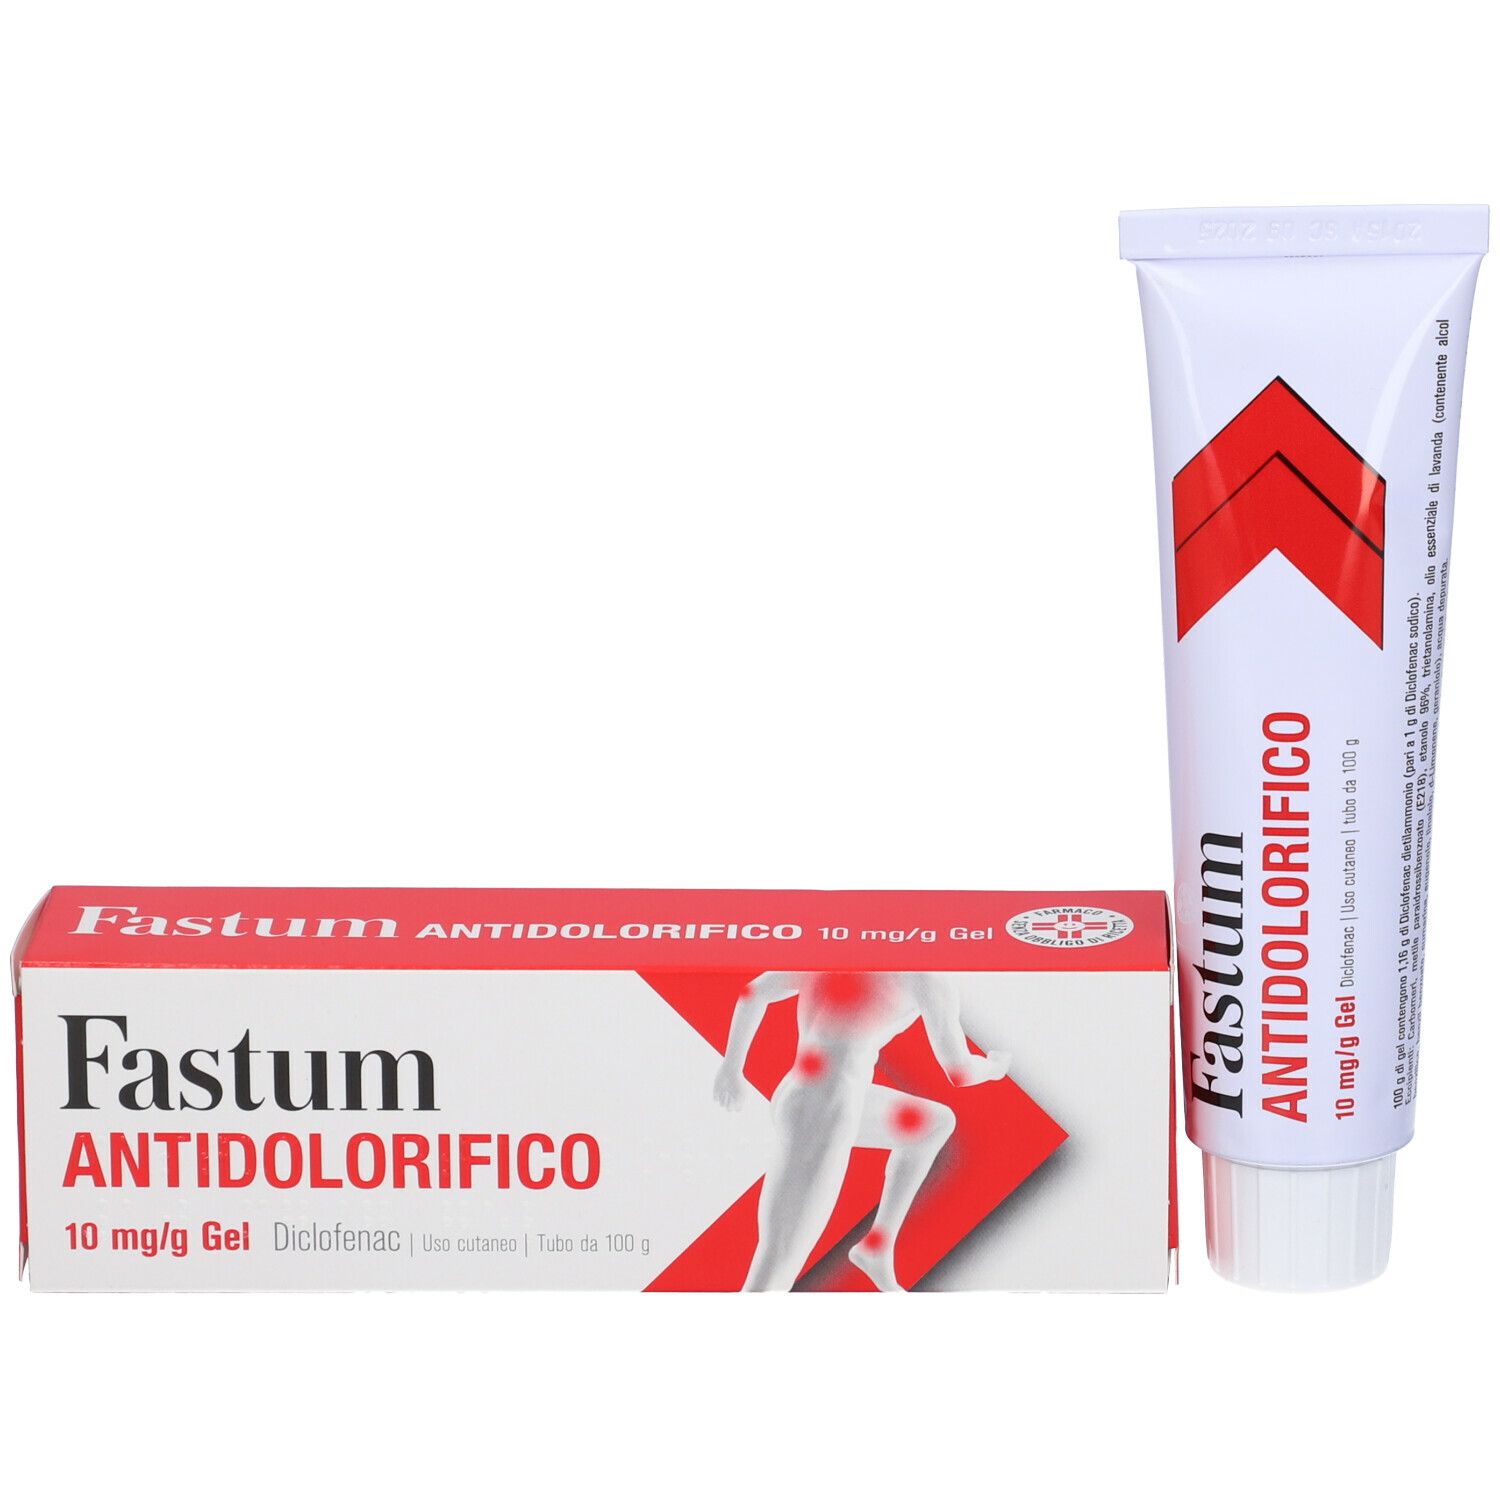 Fastum Antidolorifico Gel 100 g